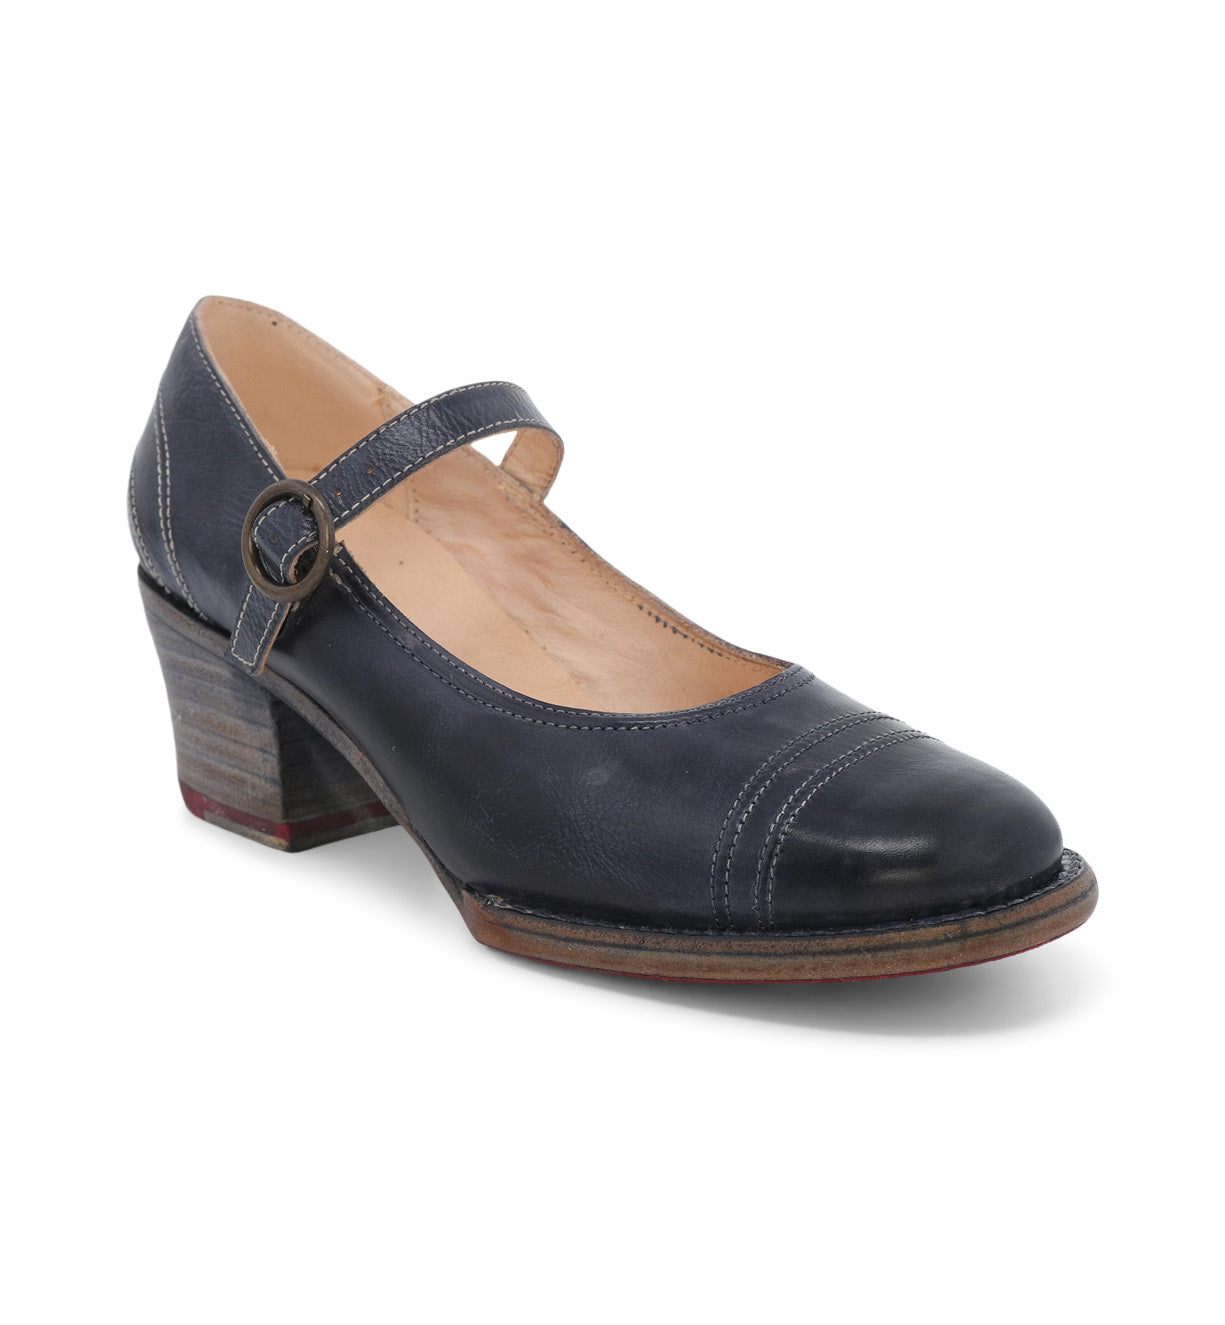 A women's blue leather Mary Jane shoe with a wooden heel in Oak Tree Farms Twigley style.